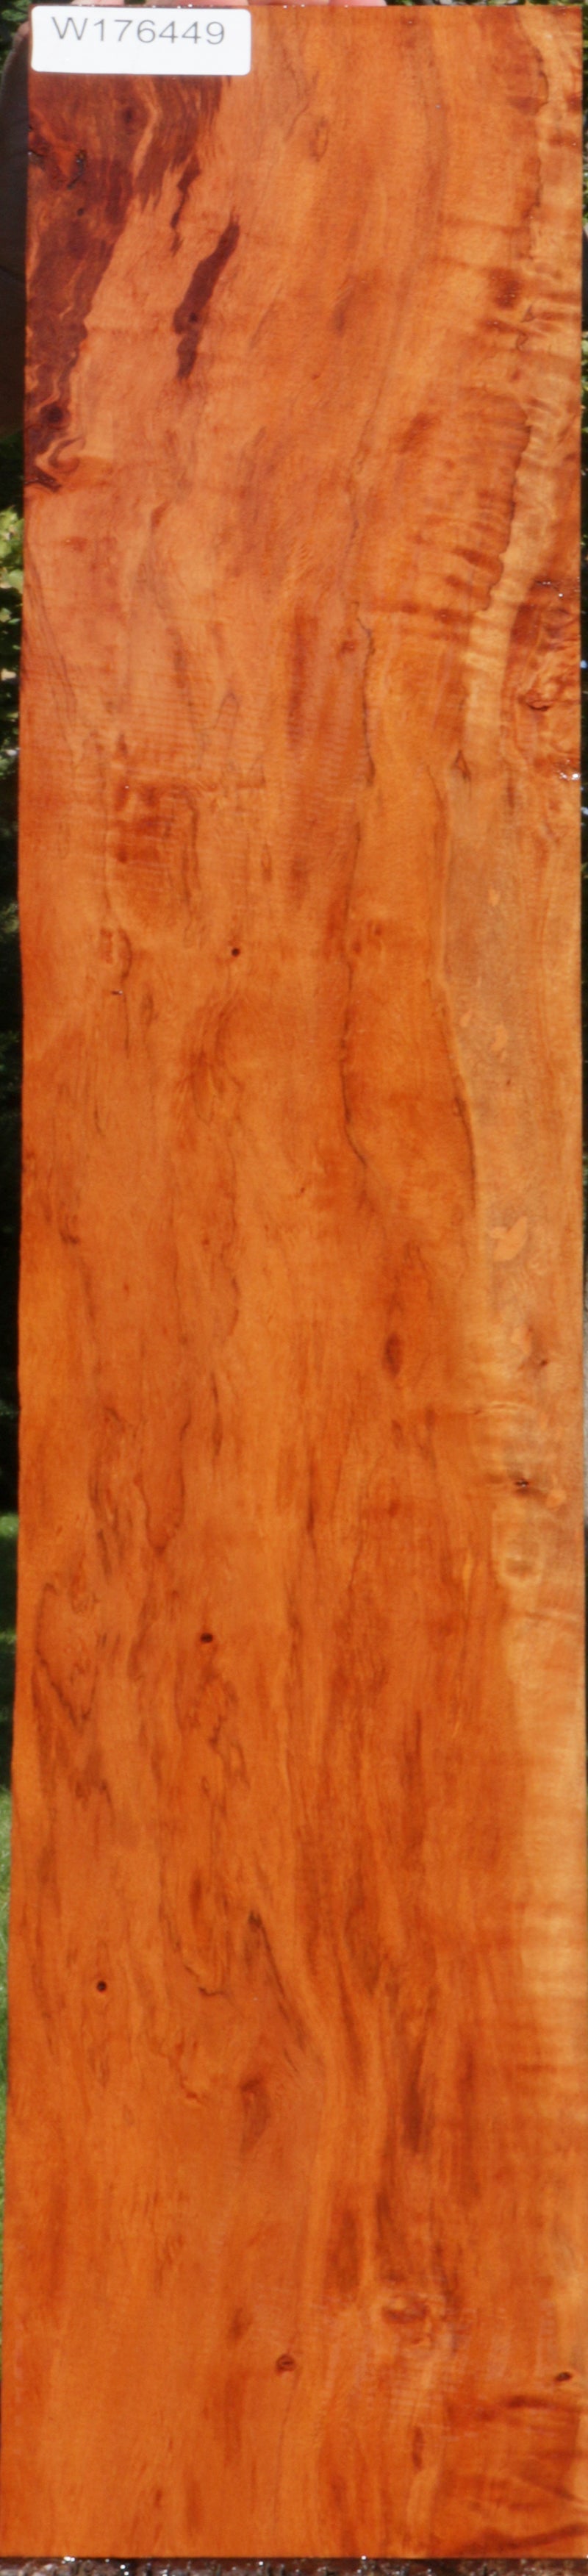 Spalted Figured Rambutan Lumber